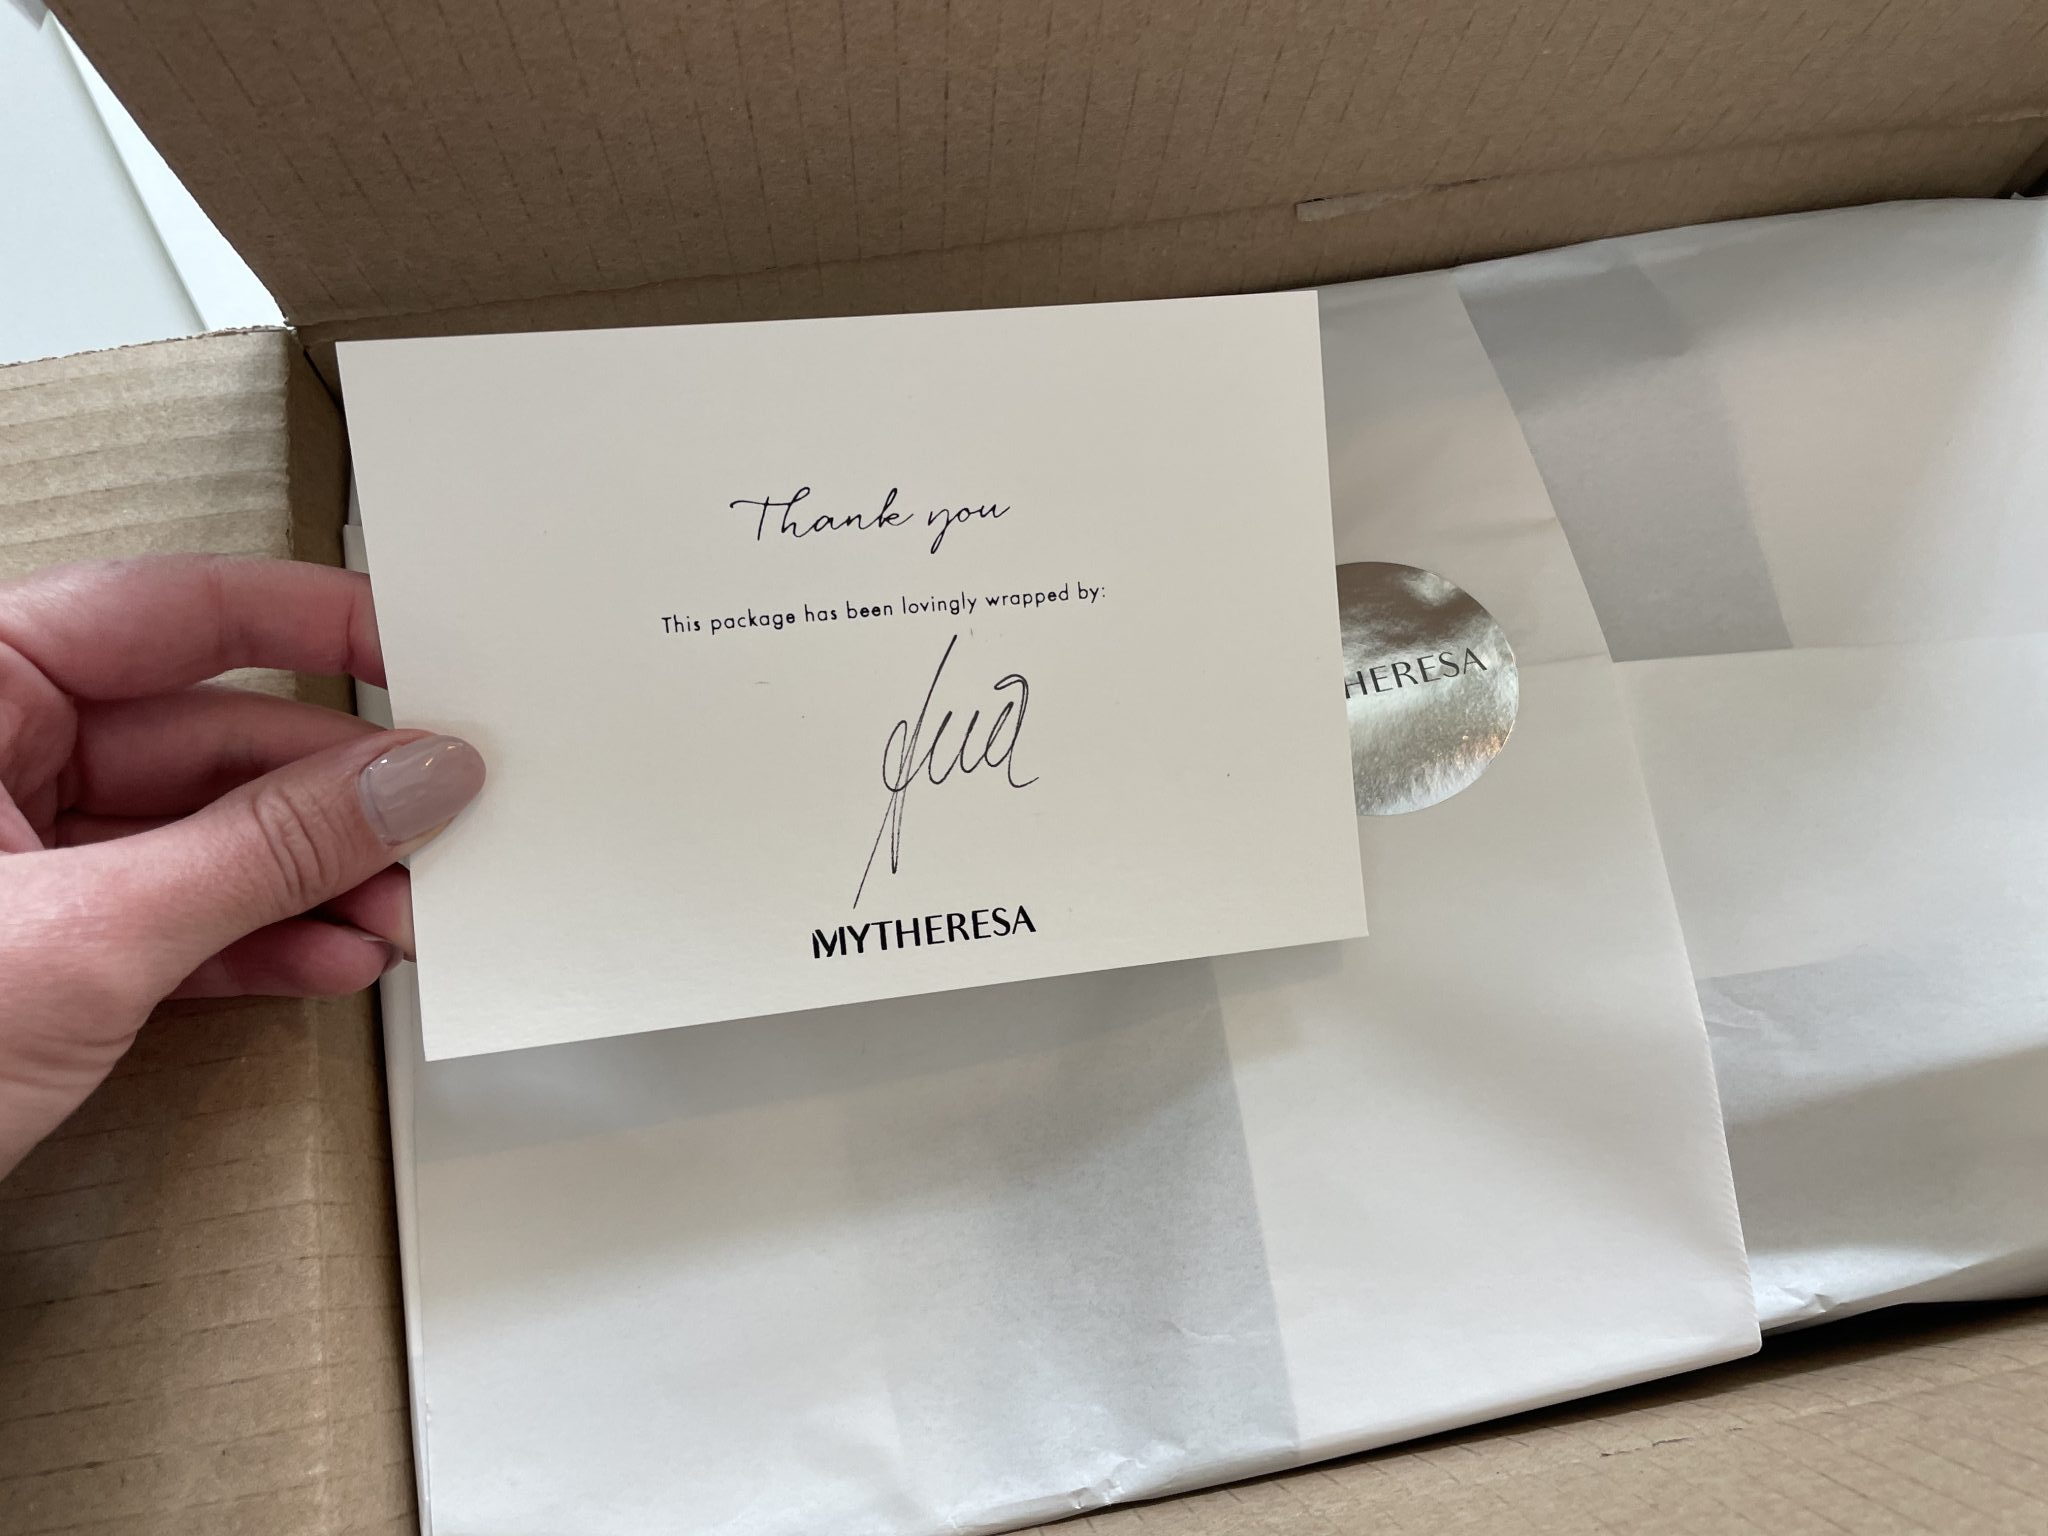 Mytheresa packaging of my order